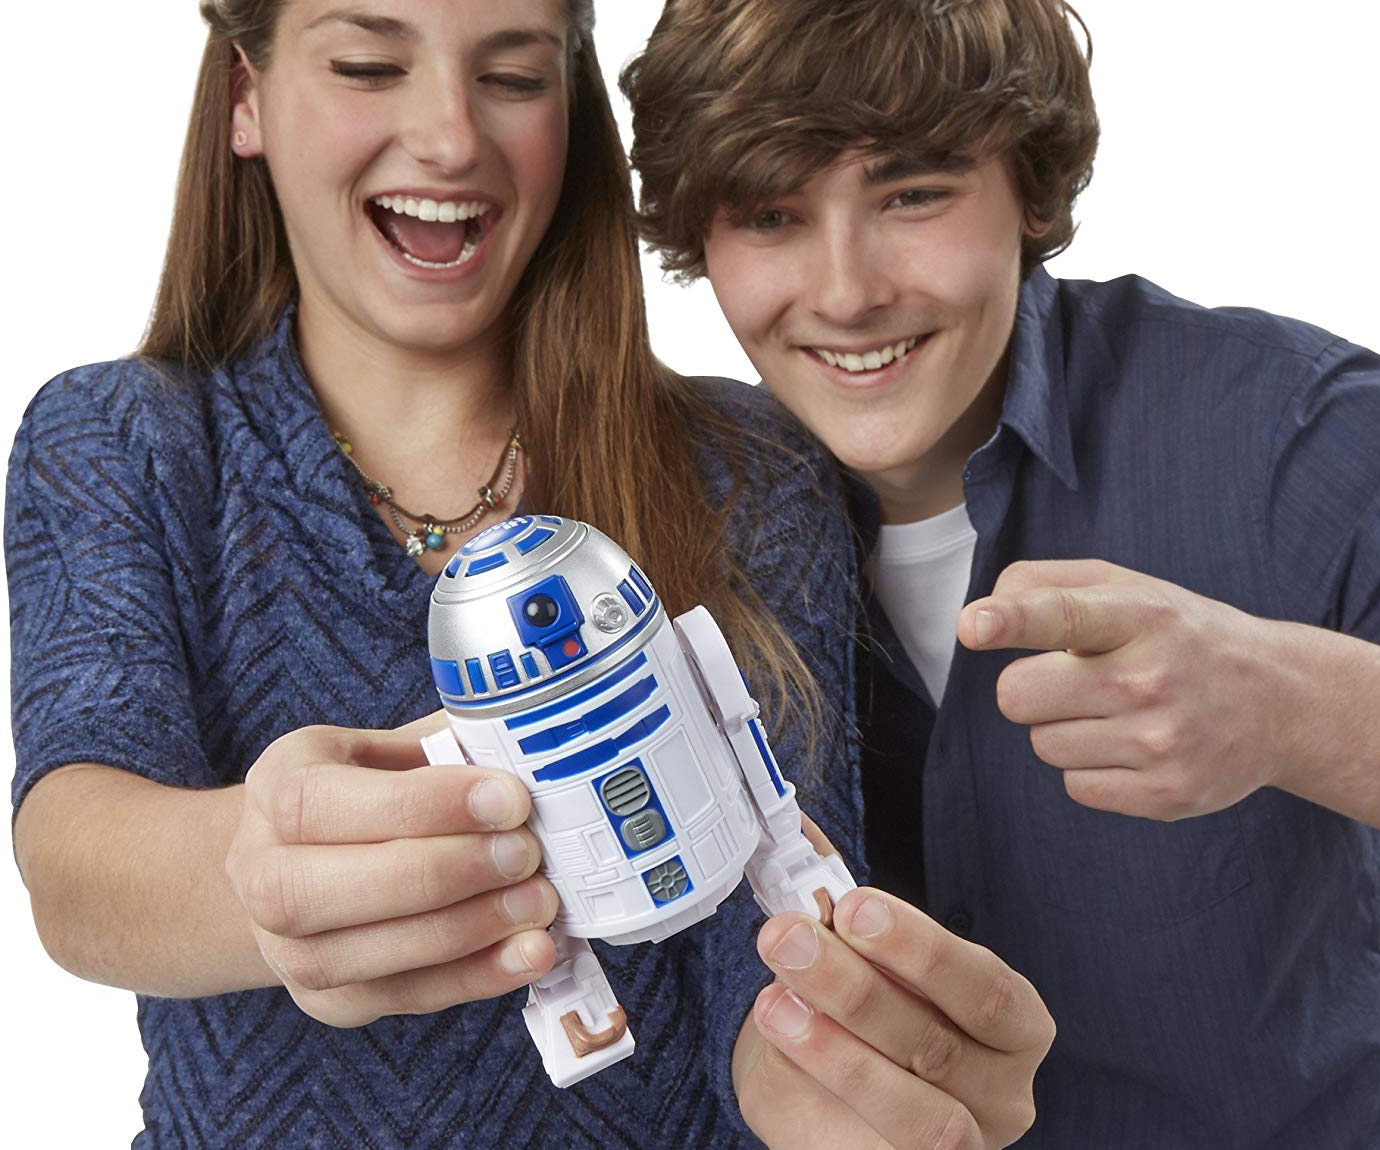 R2 D2 Bop It Toy 2